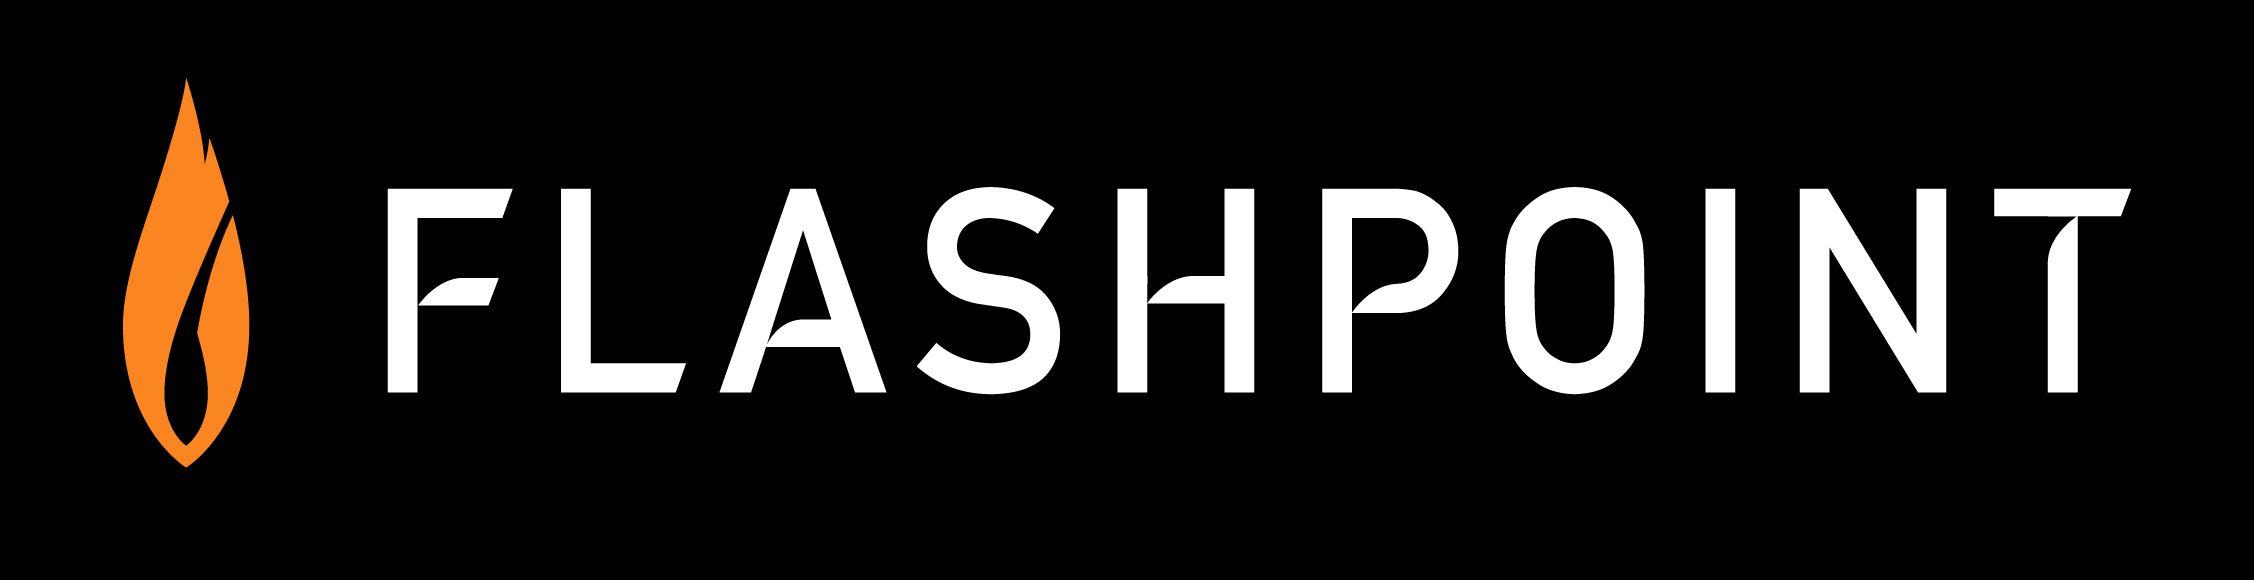 Flashpoint Logo - Flashpoint - BUSINESS RISK INTELLIGENCE